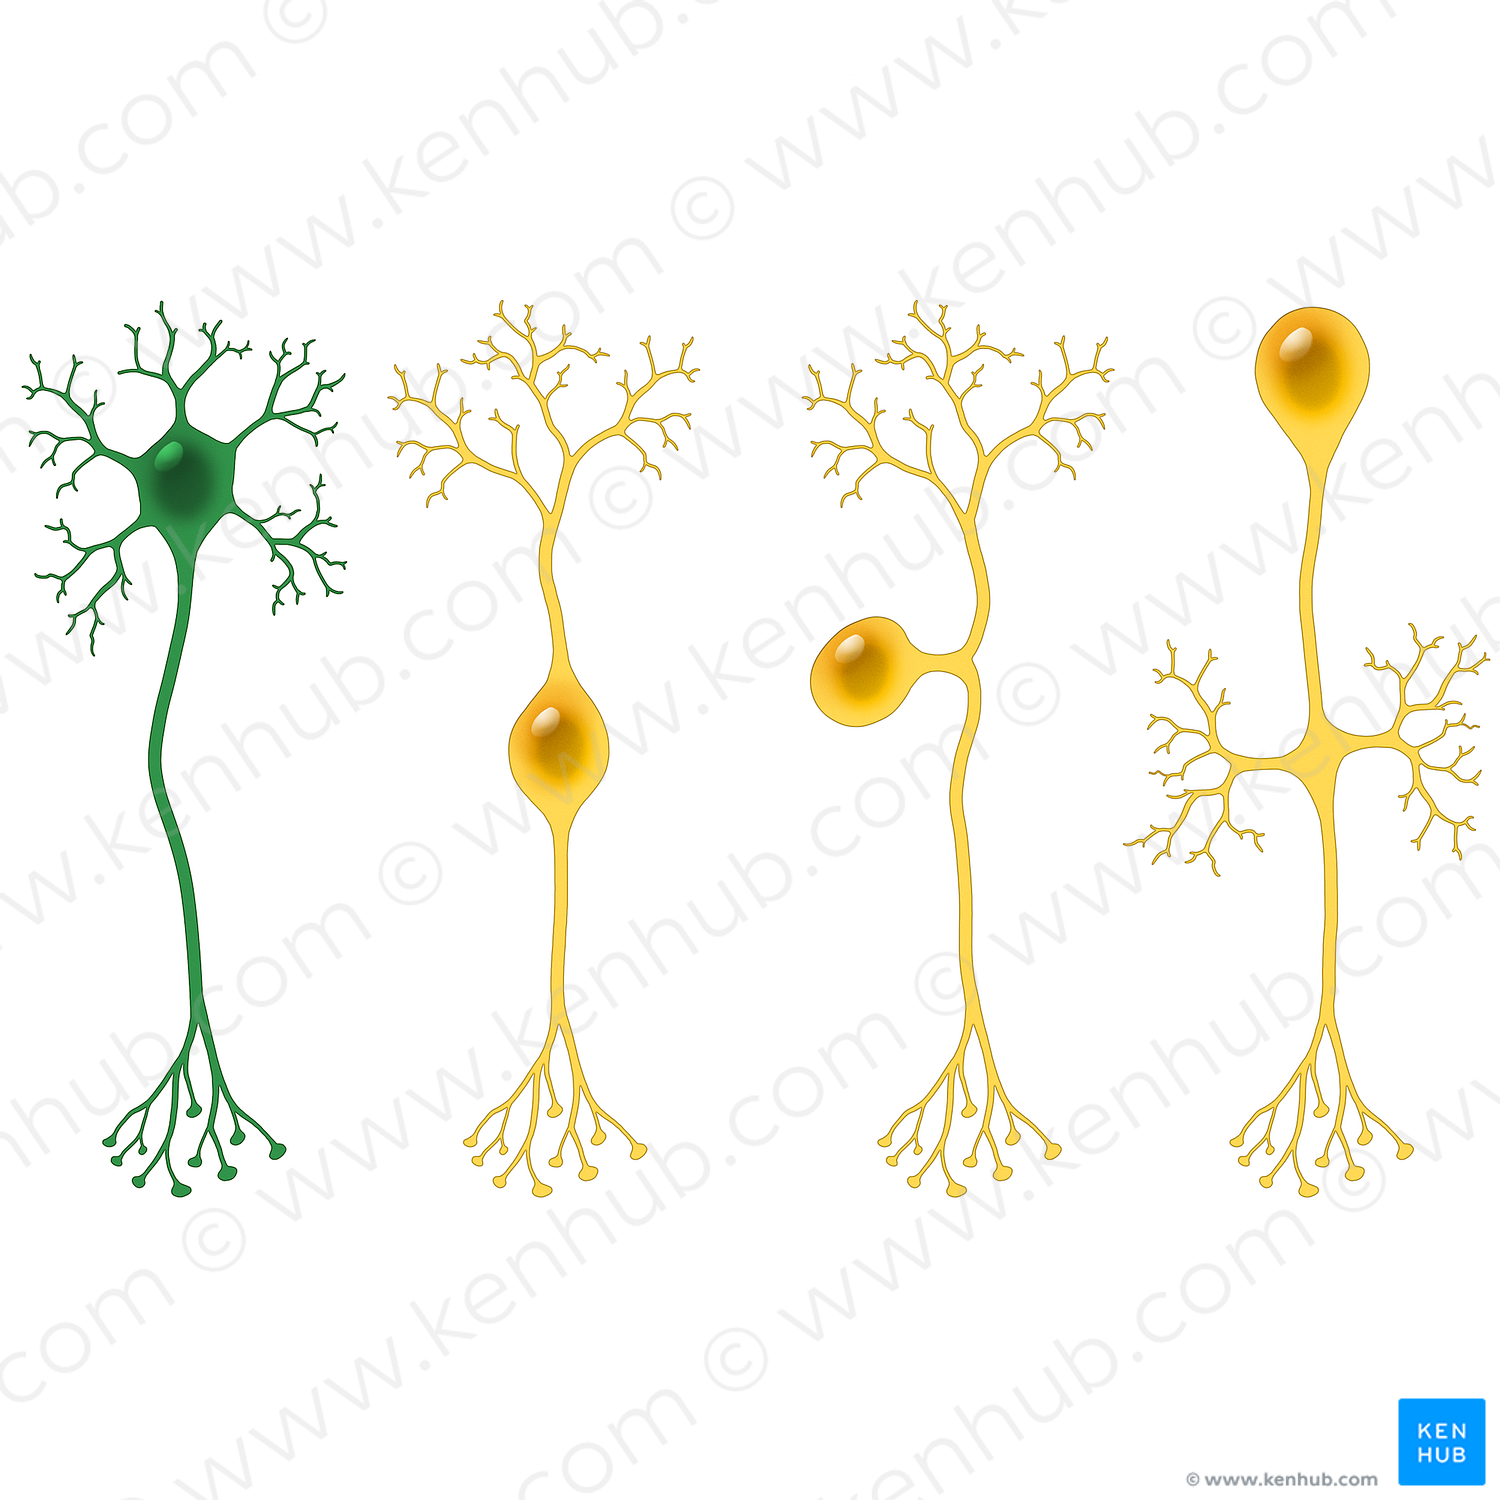 Multipolar neuron (#13509)